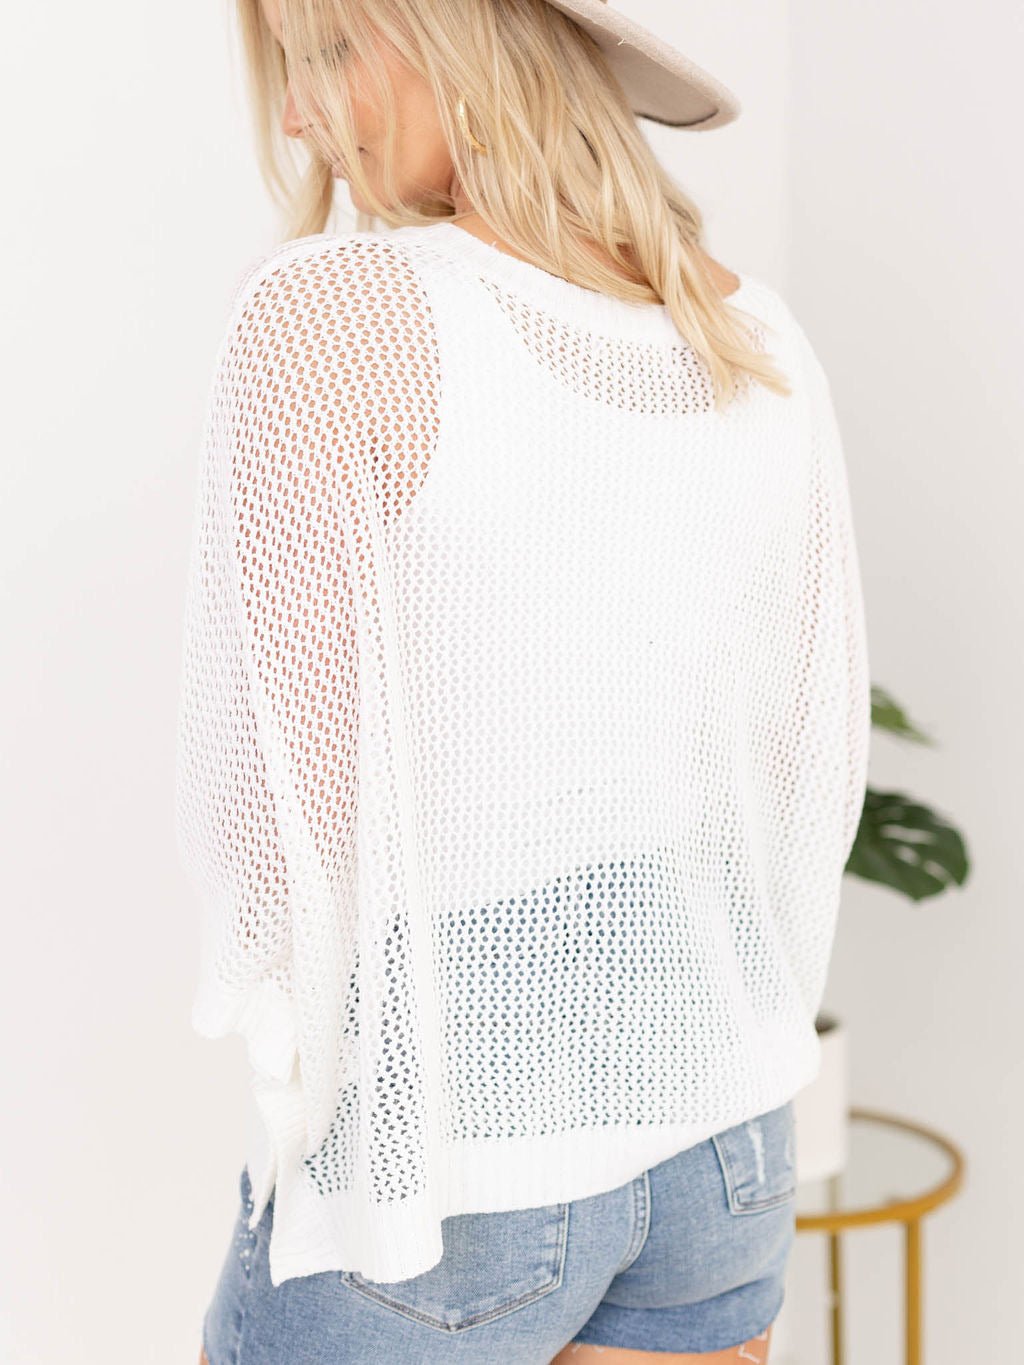 Crochet Sleeve Cover-Up SweaterKnit tops